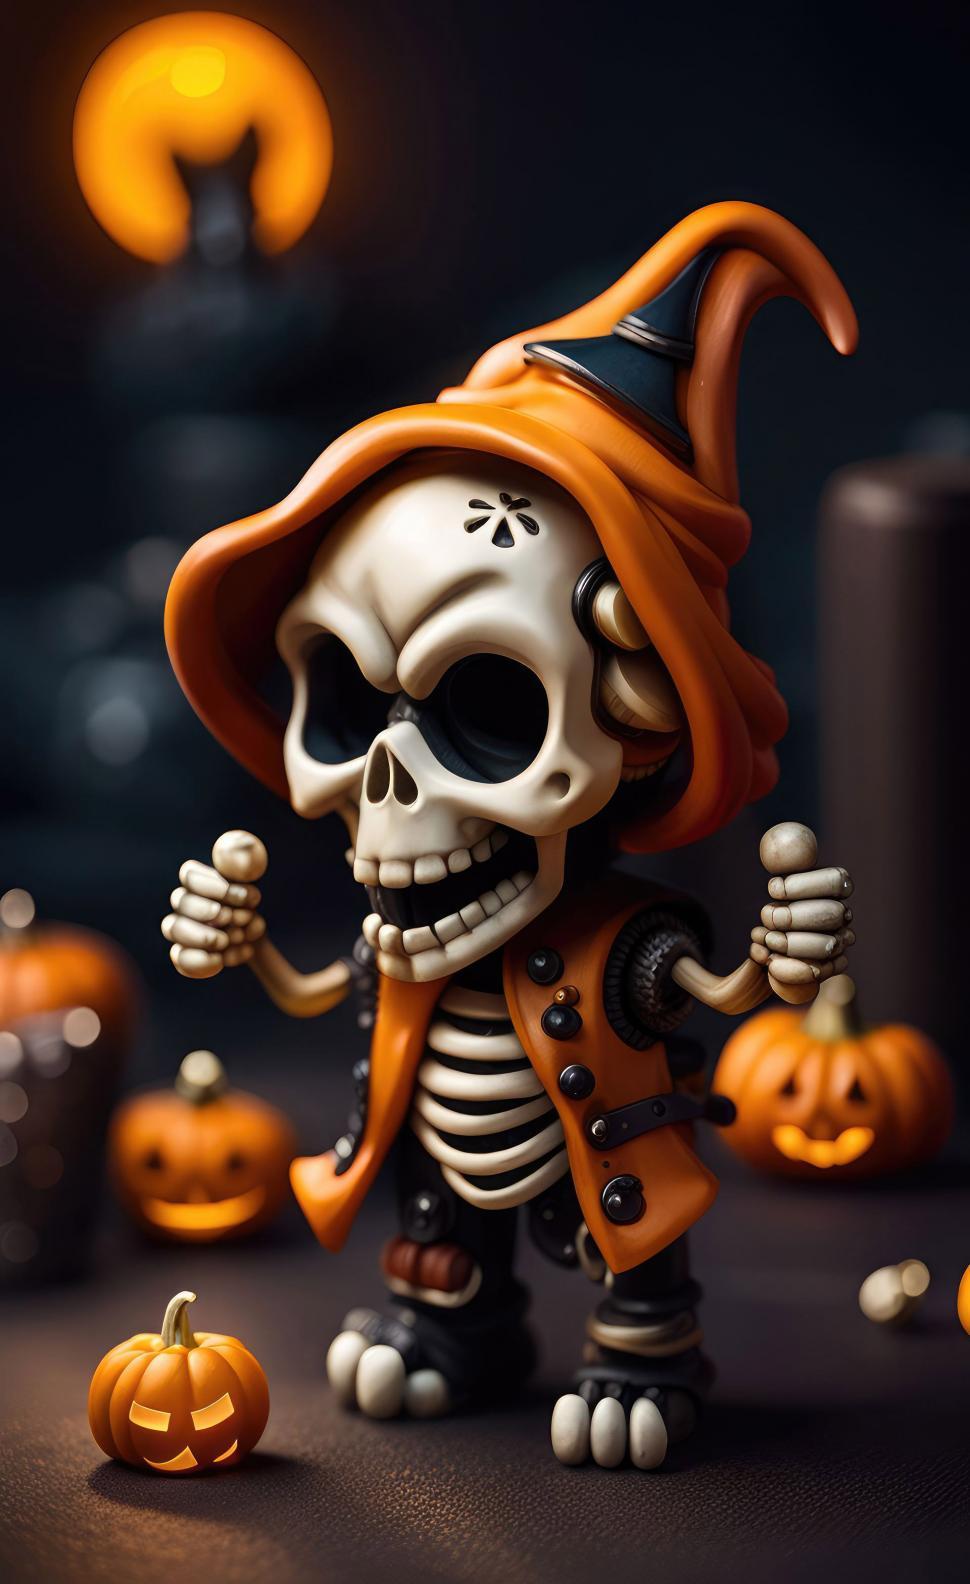 Free Image of Spooky halloween skeleton monster  